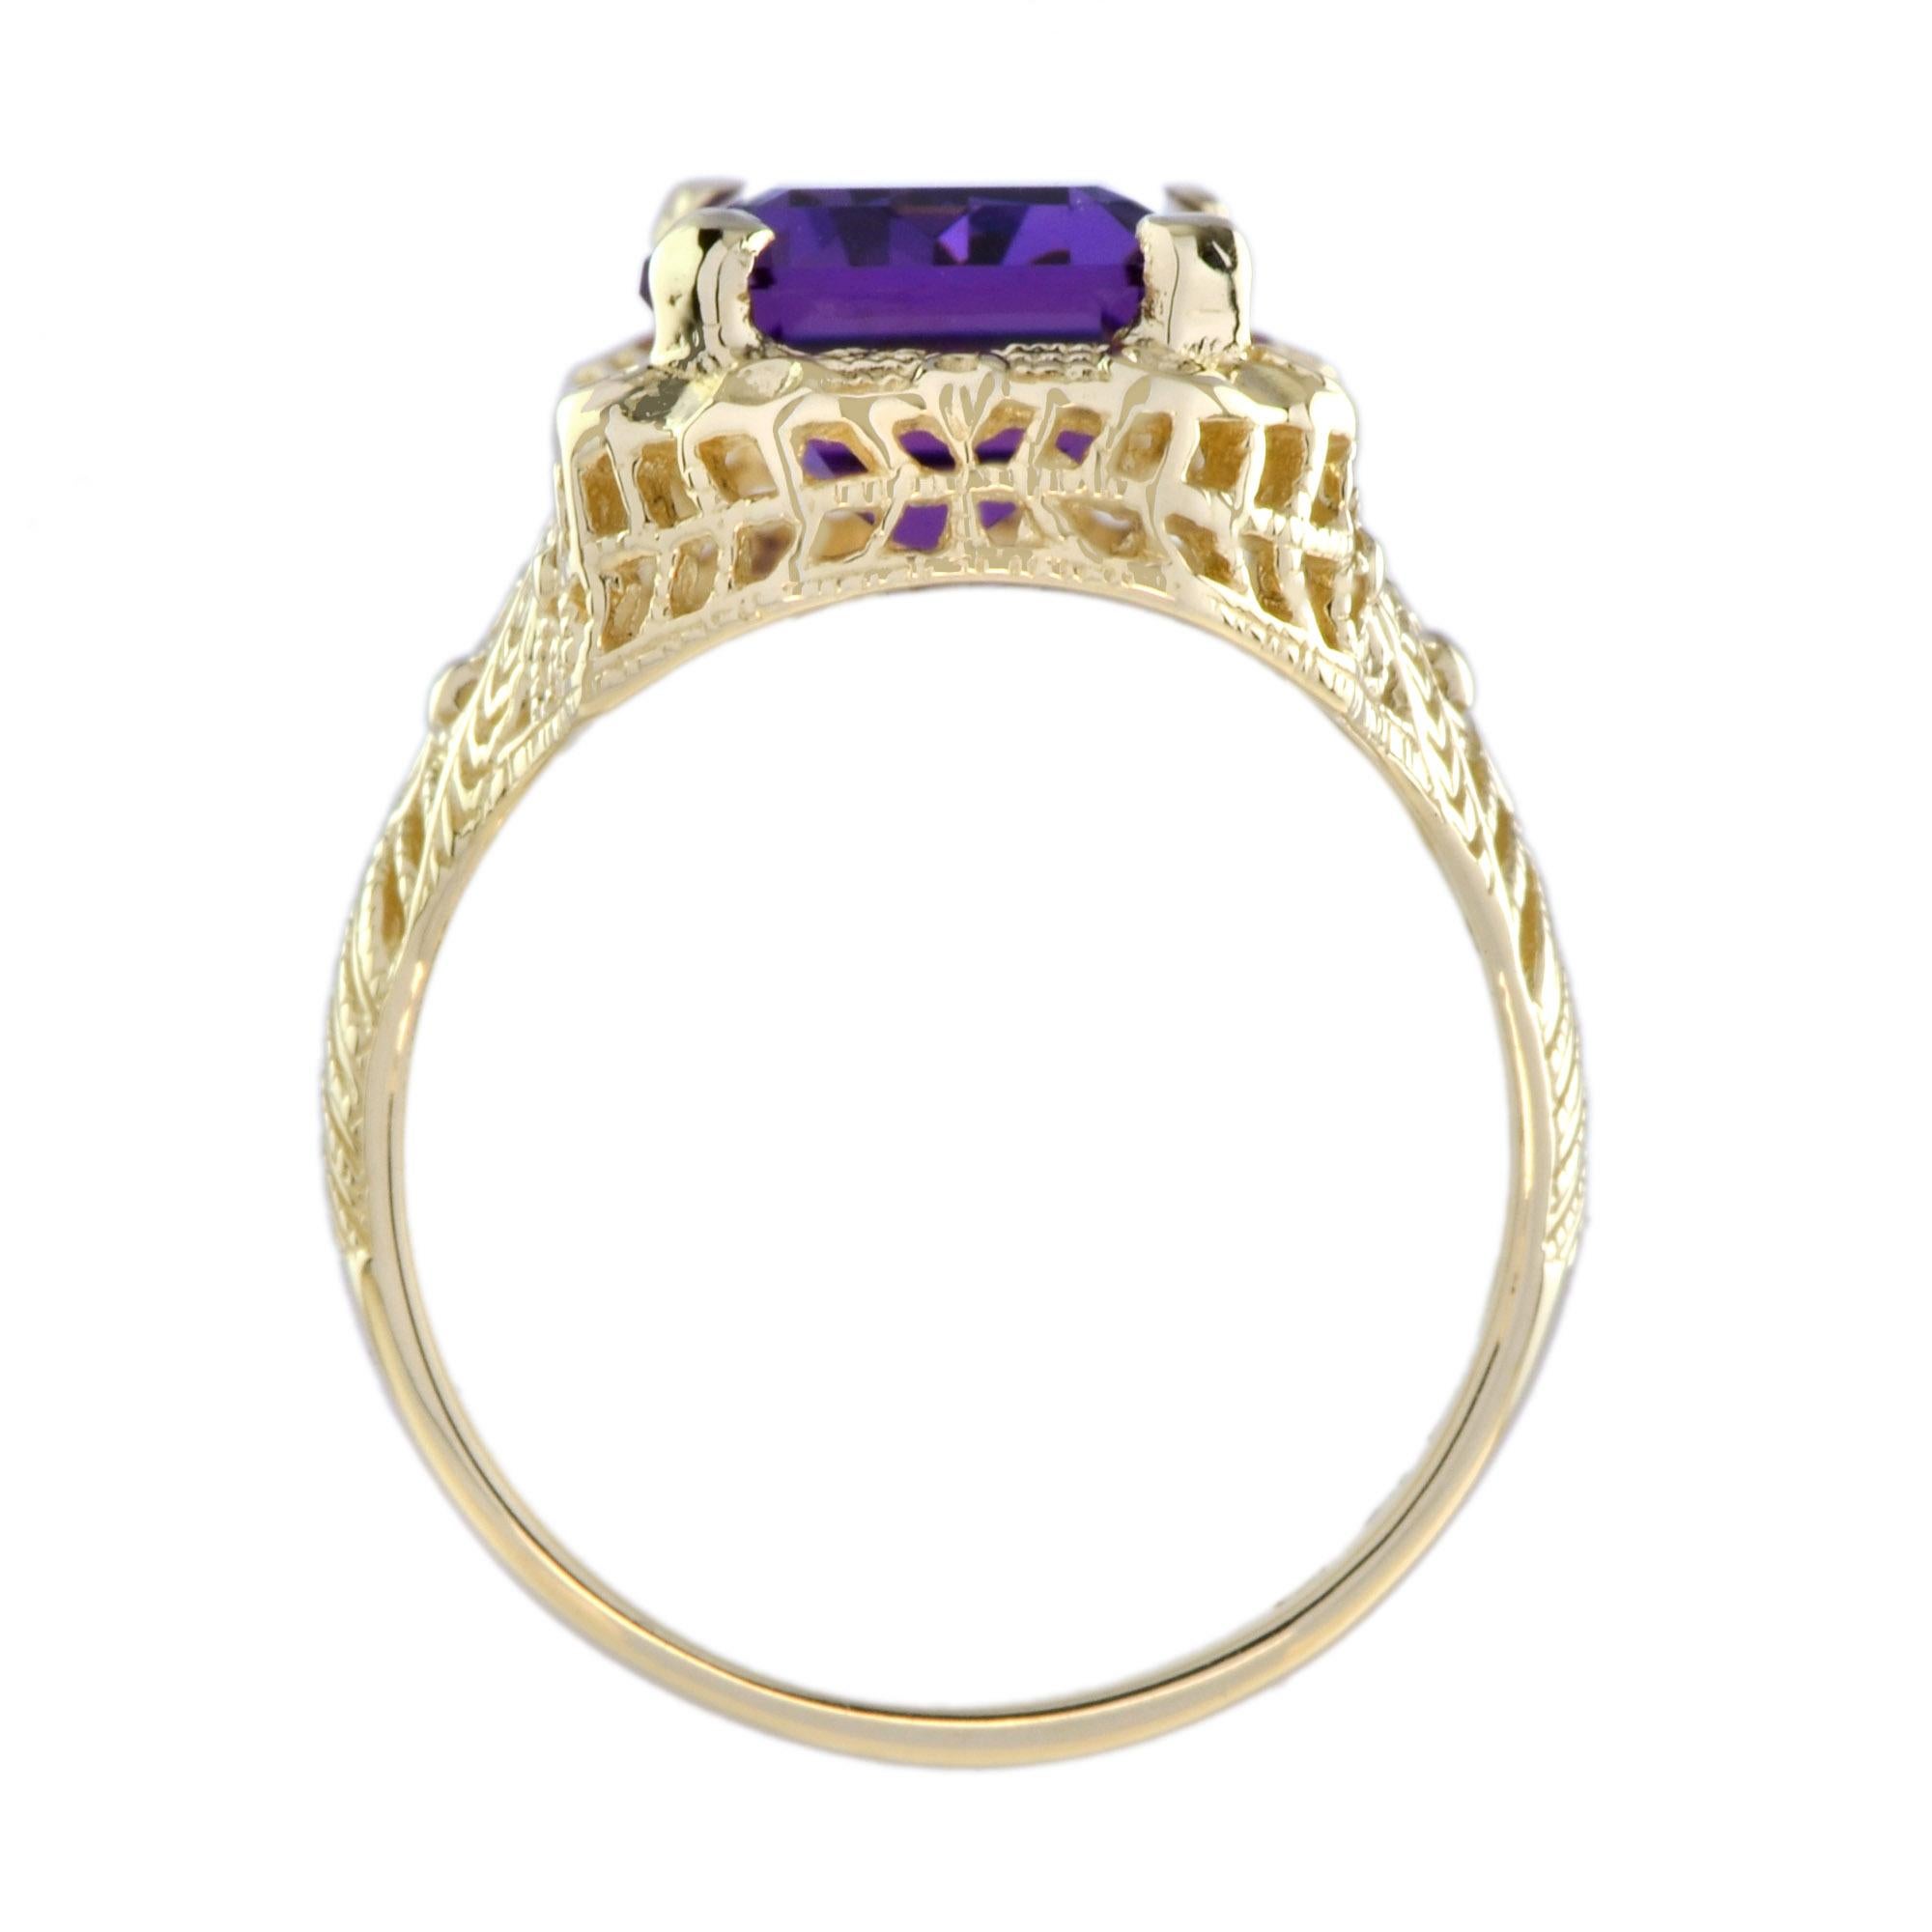 Women's or Men's Art Deco Style 9 Carats Emerald Cut Amethyst Filigree Ring in 9K Yellow Gold